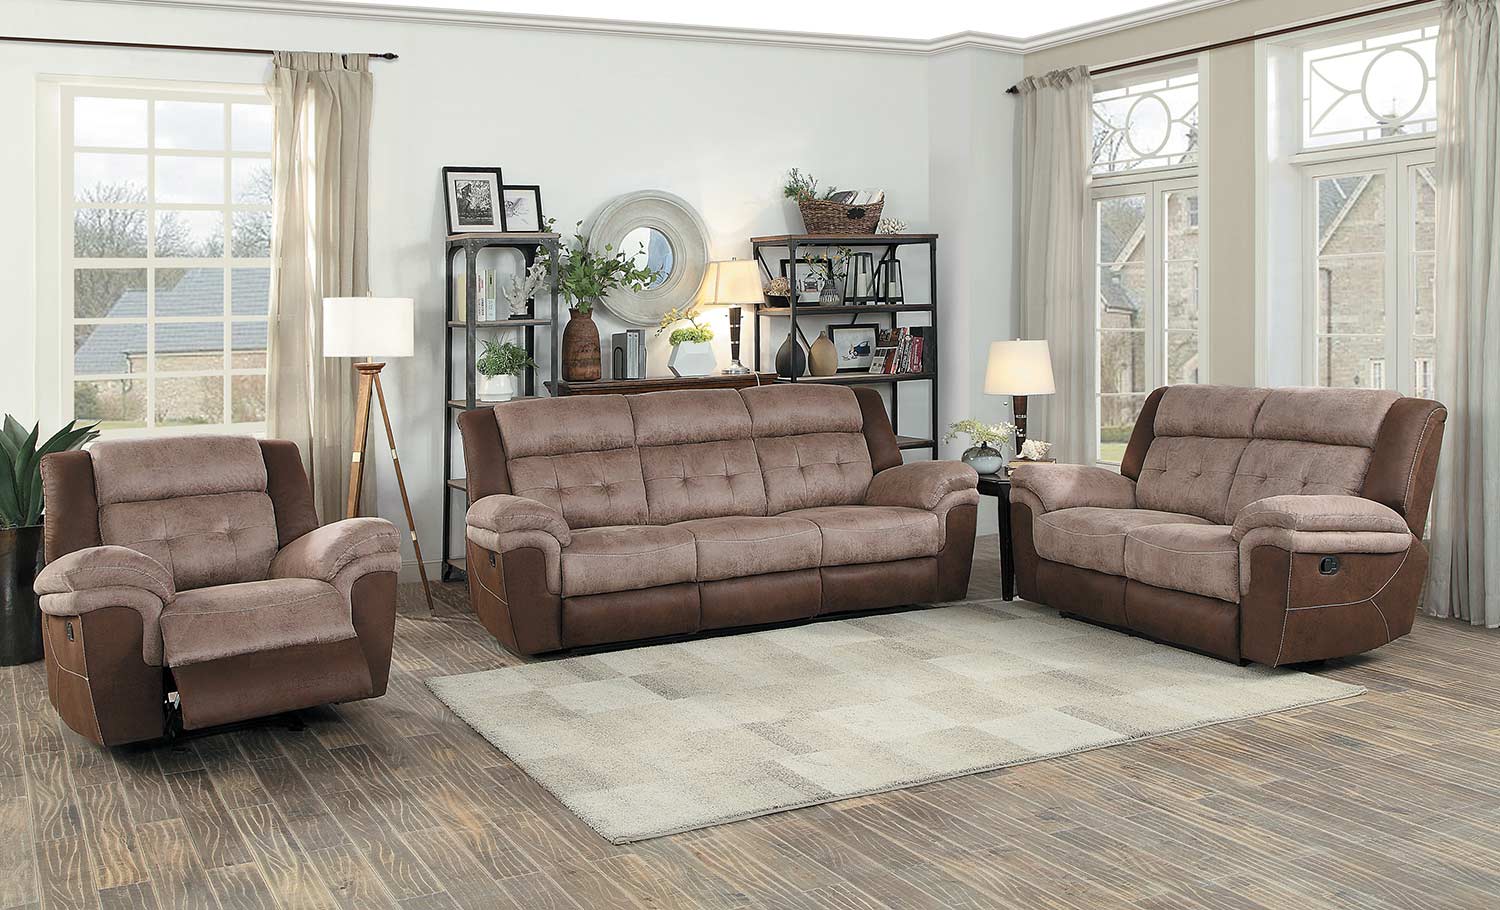 Homelegance Chai Reclining Sofa Set - Brown and dark brown polished microfiber